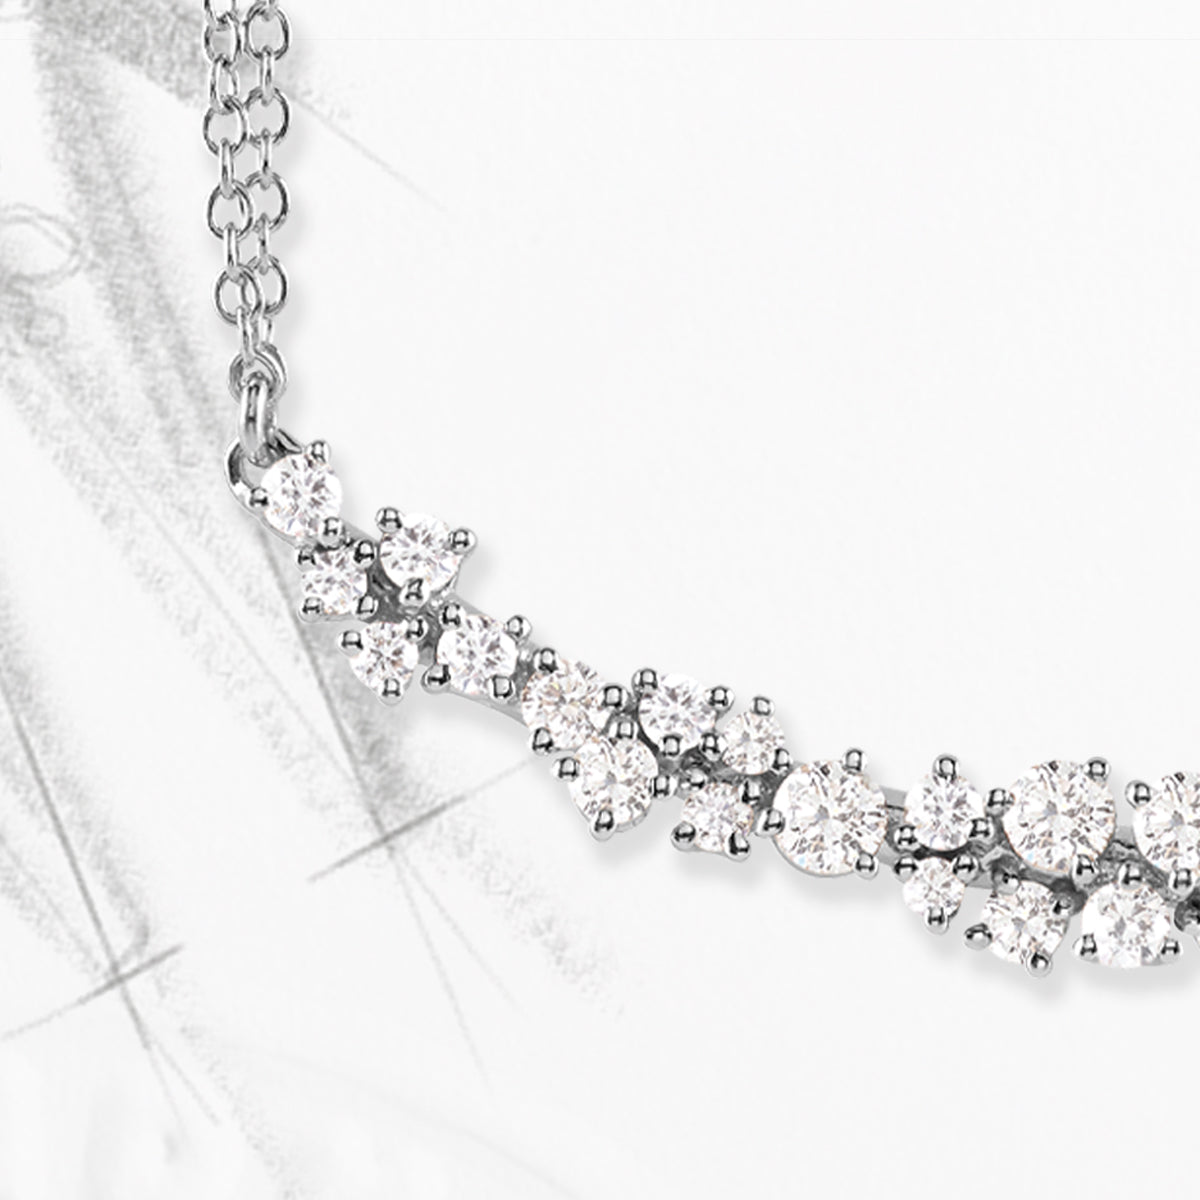 Damiani Minou White Gold, Aquamarine and Diamond Necklace